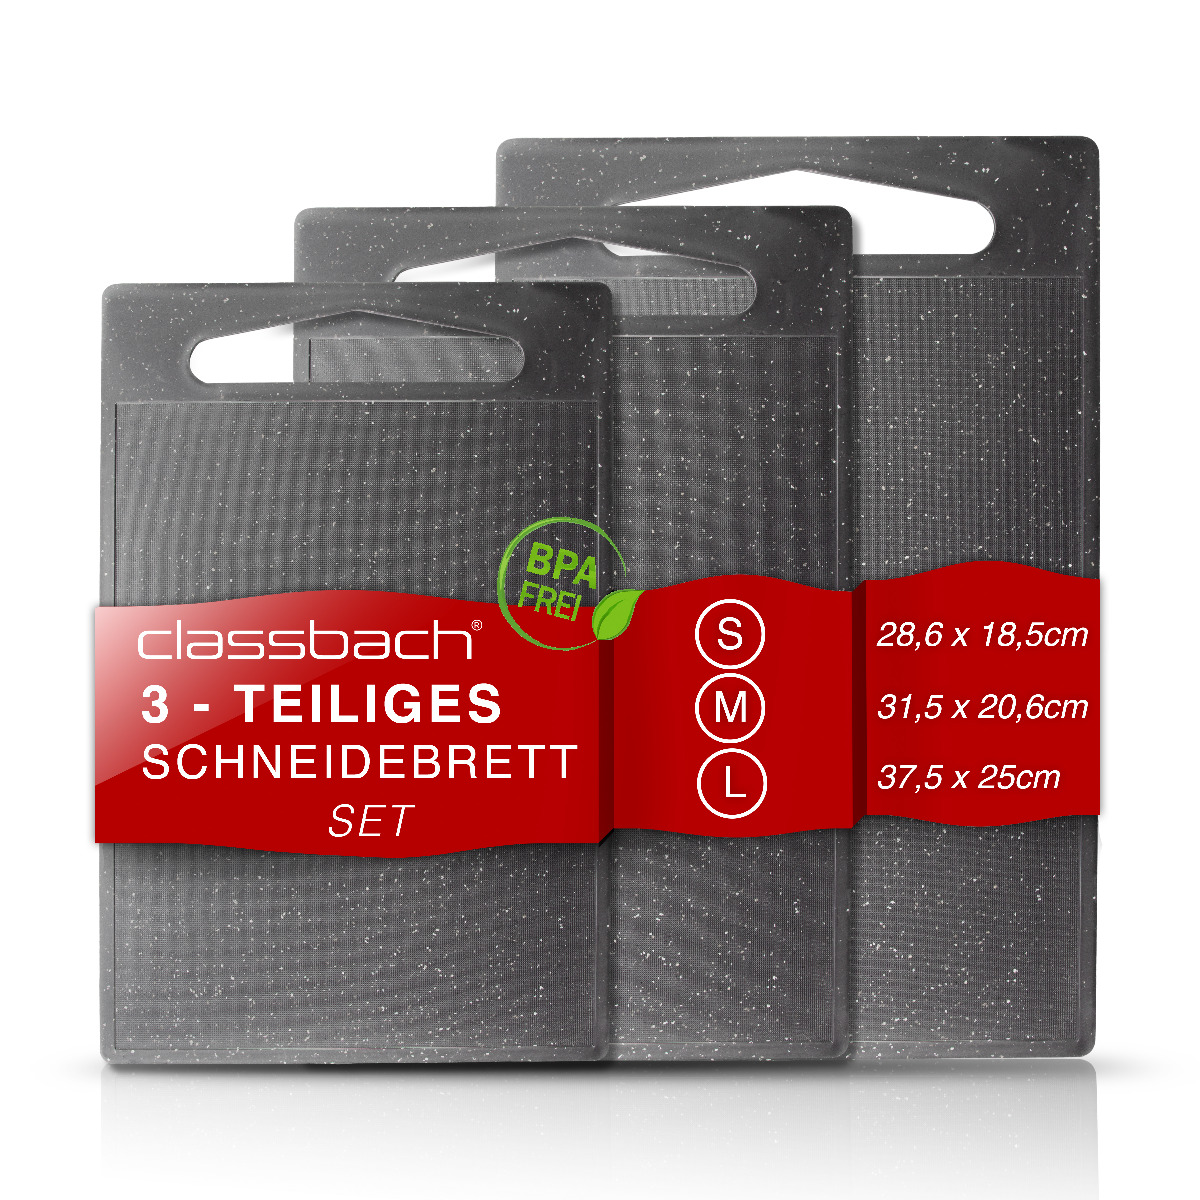 C-SB Schneidebrett CLASSBACH 4012 K